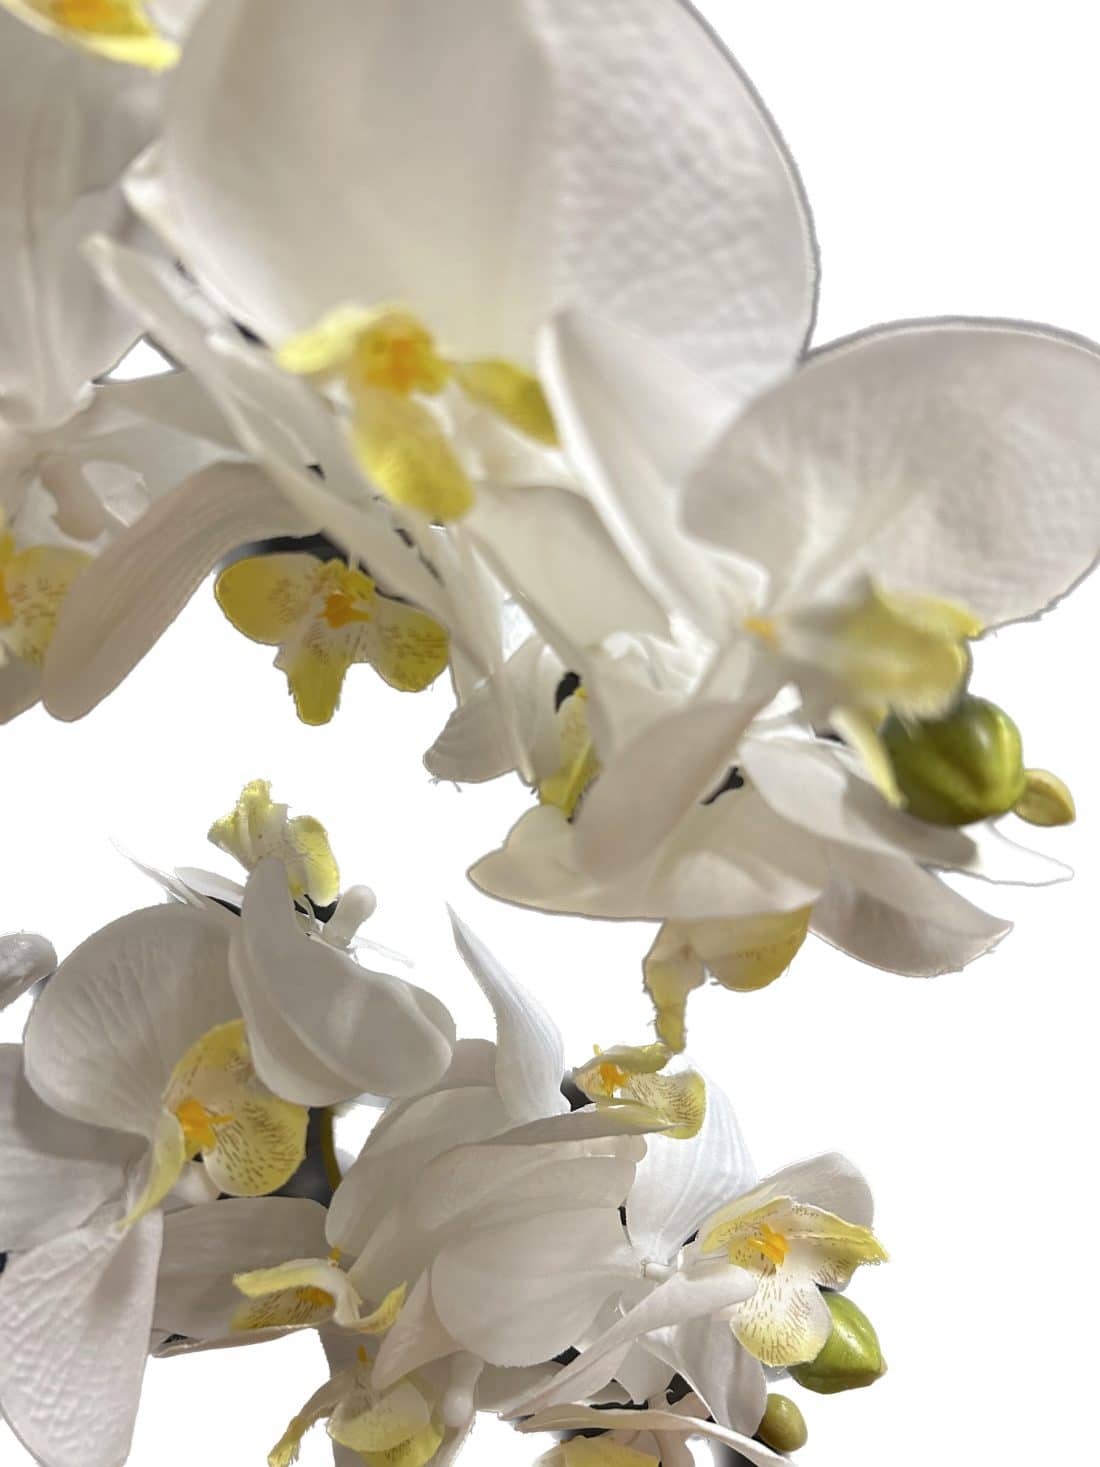 Zijdeplant in pot Orchidee wit